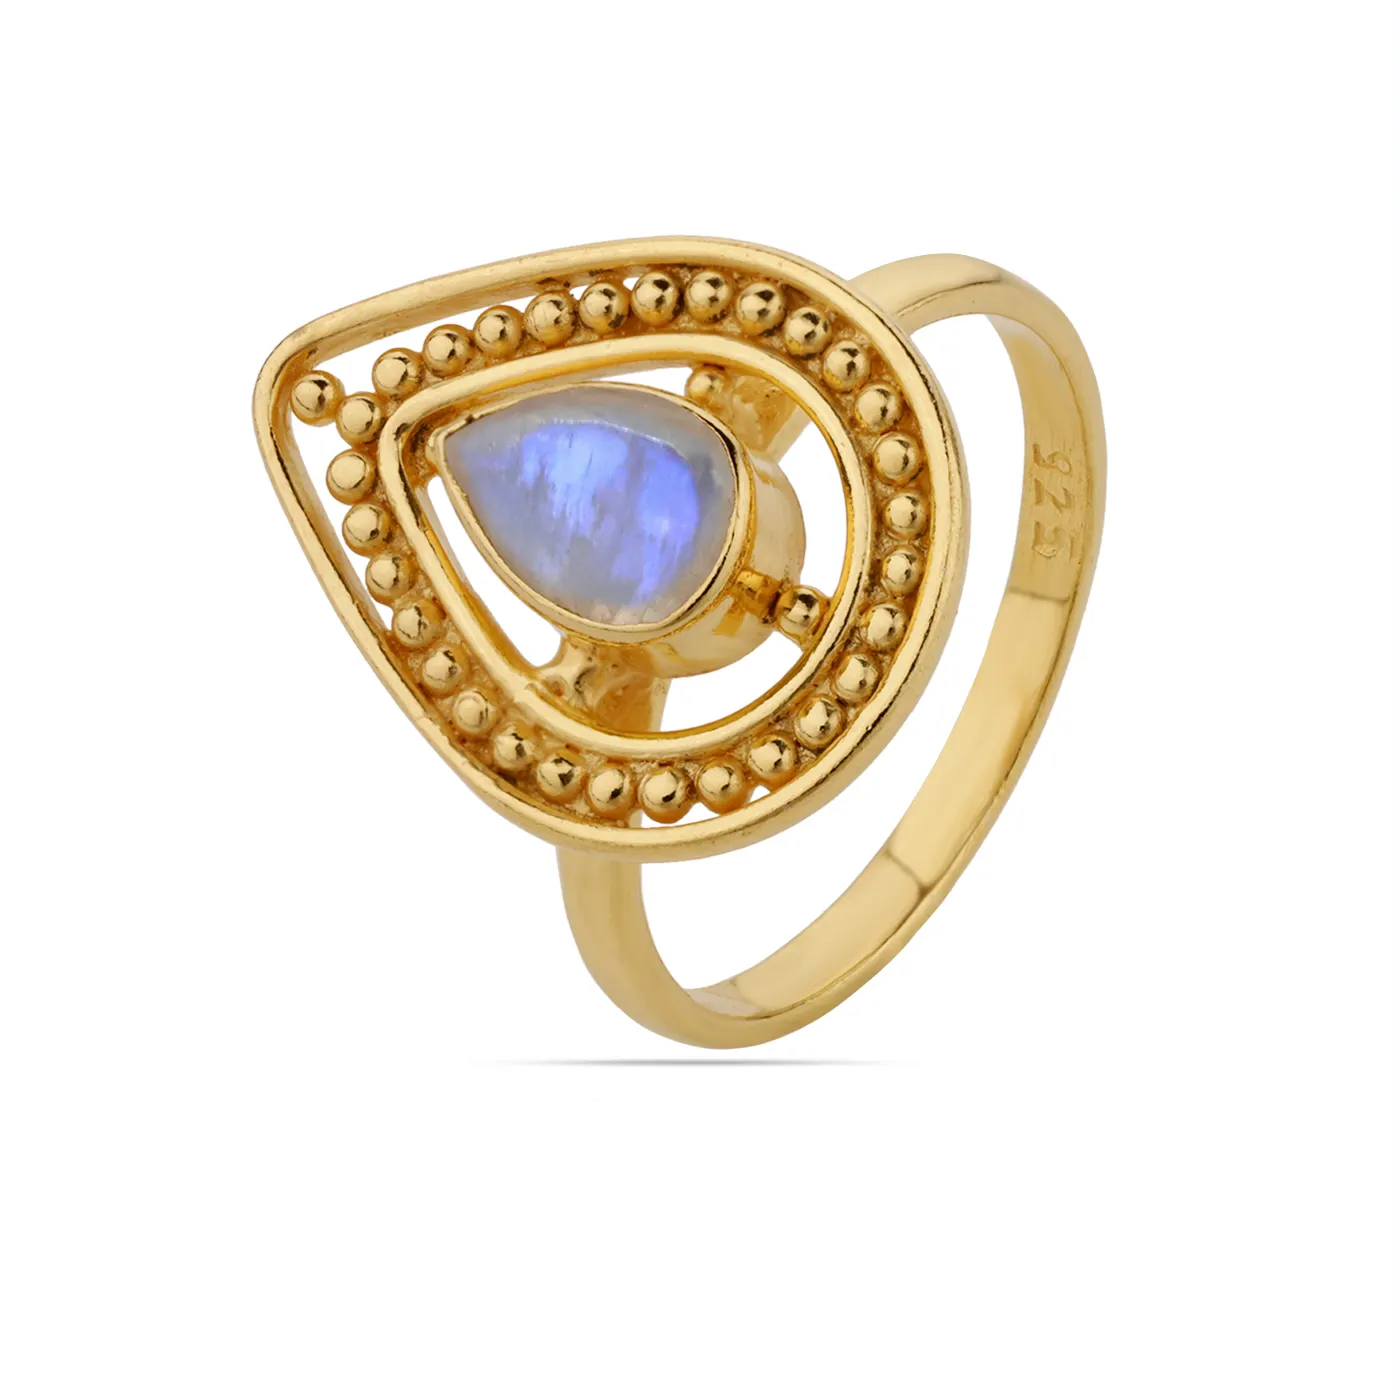 Perhiasan mewah berkelas cincin perak murni 925 berlapis emas padat batu permata batu Moonstone pelangi alami pernikahan pertunangan wanita